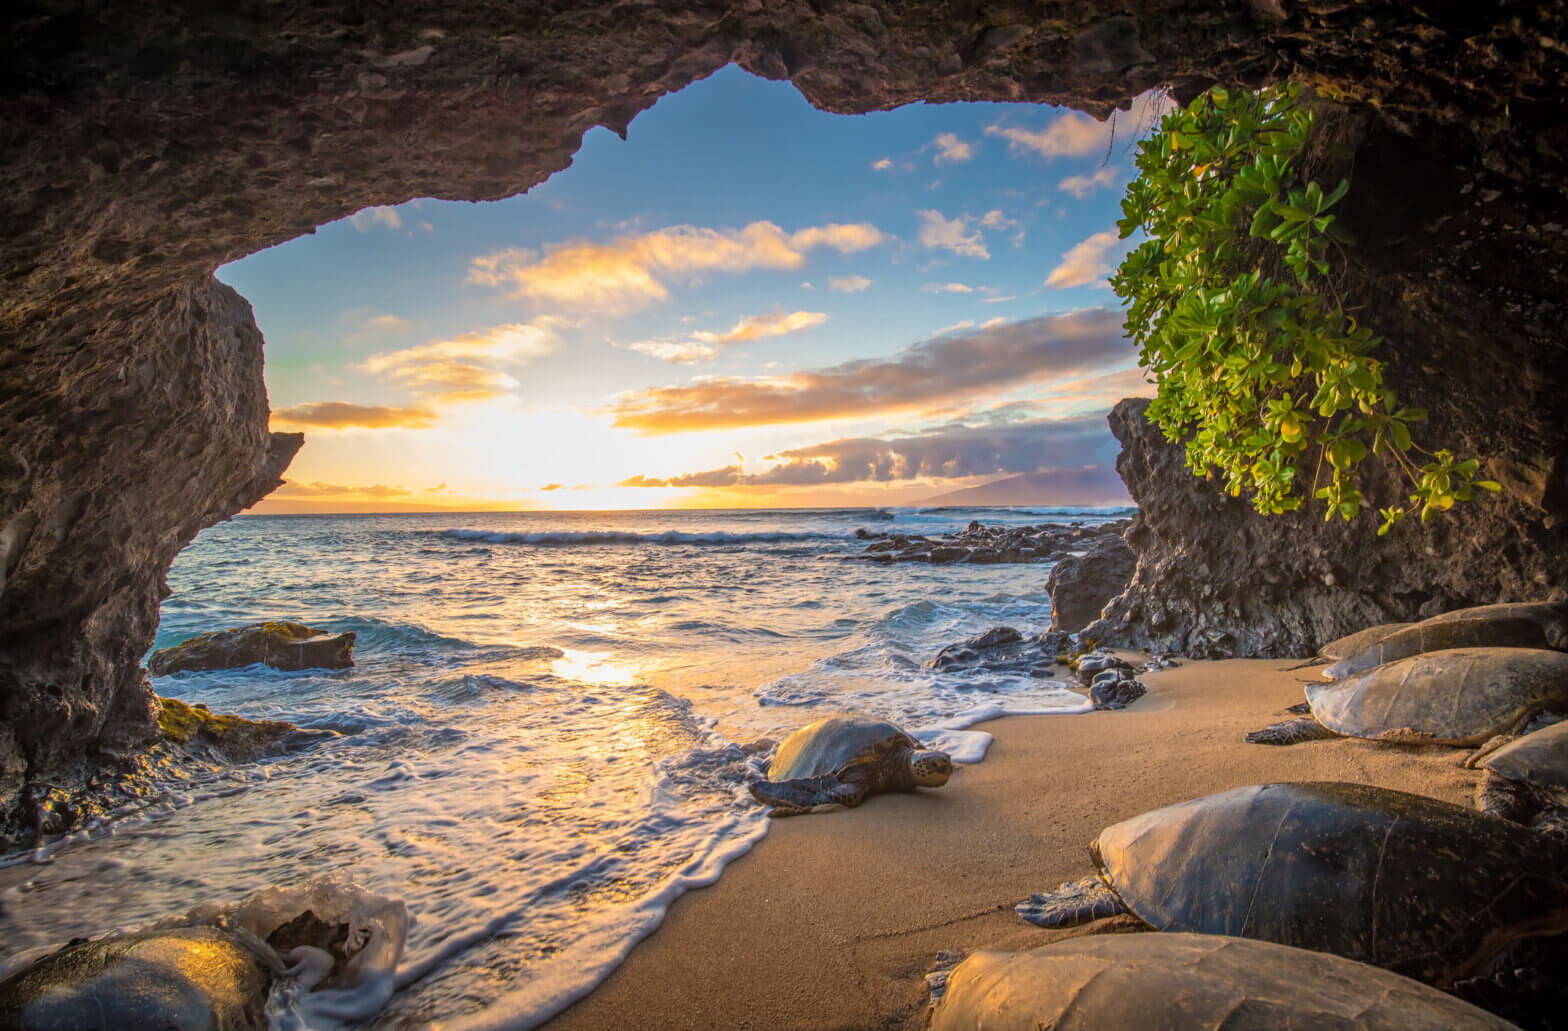 Beautiful ocean view in Hawaii